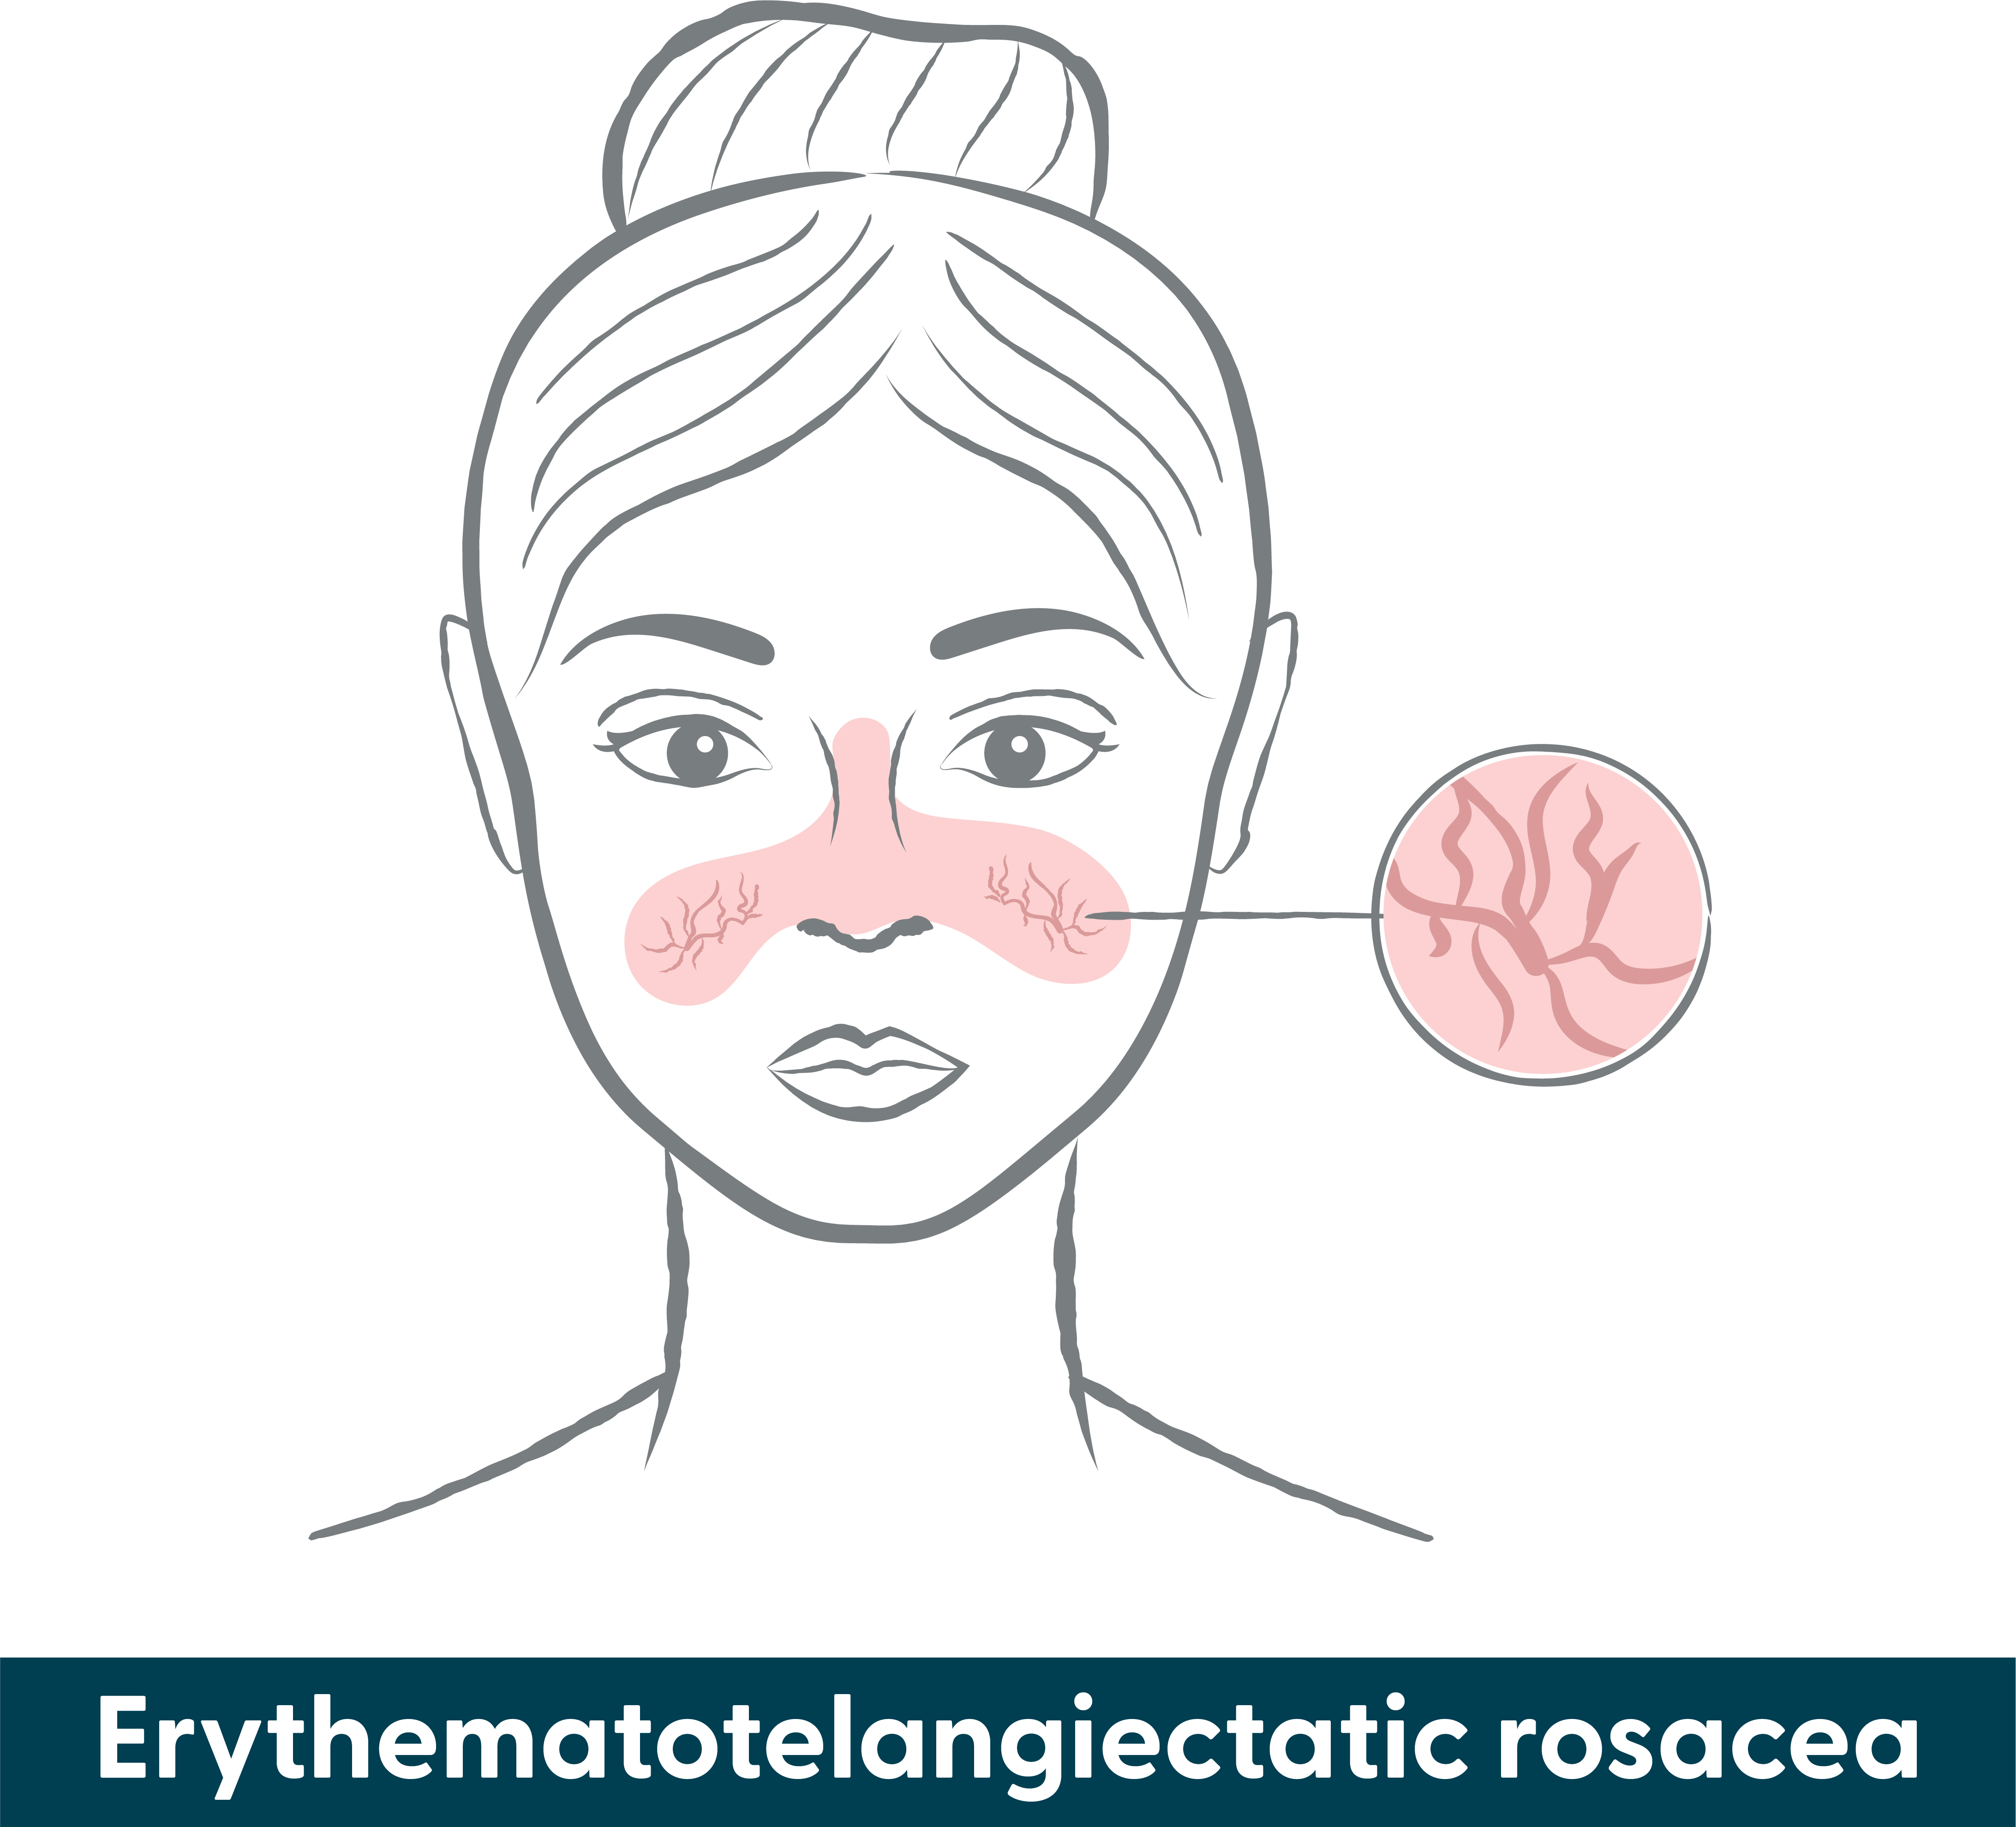 infographic of erythematotelangiectatic rosacea